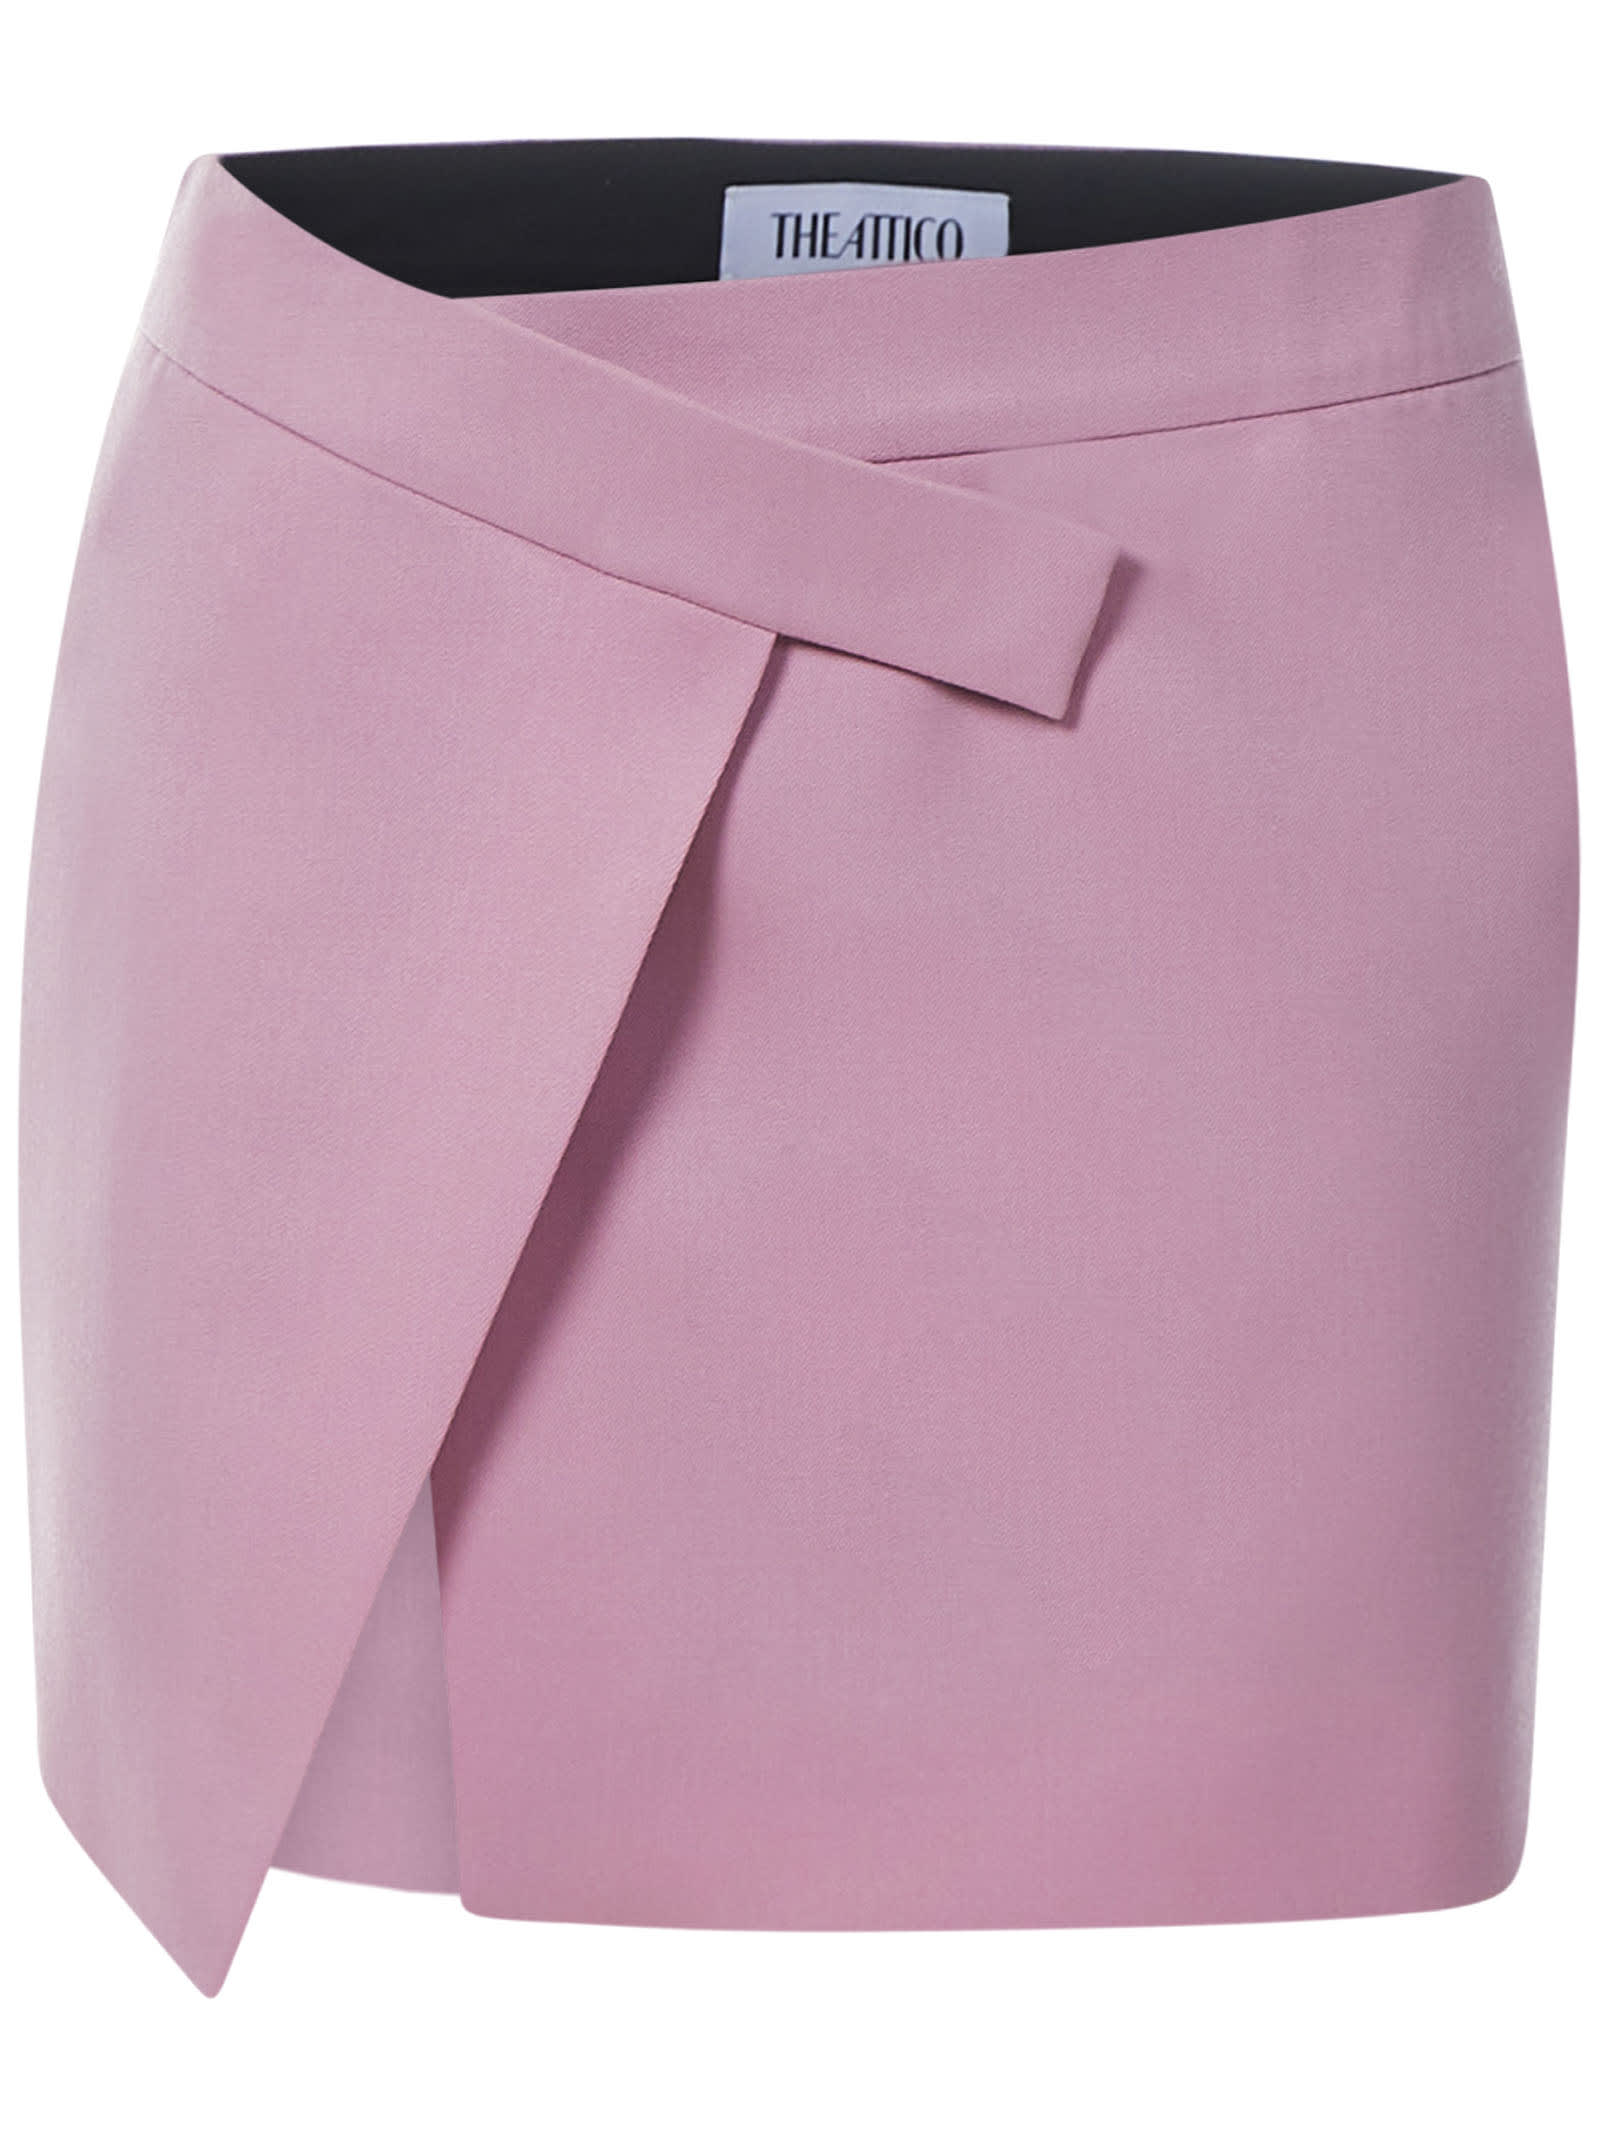 The Attico cloe Skirt